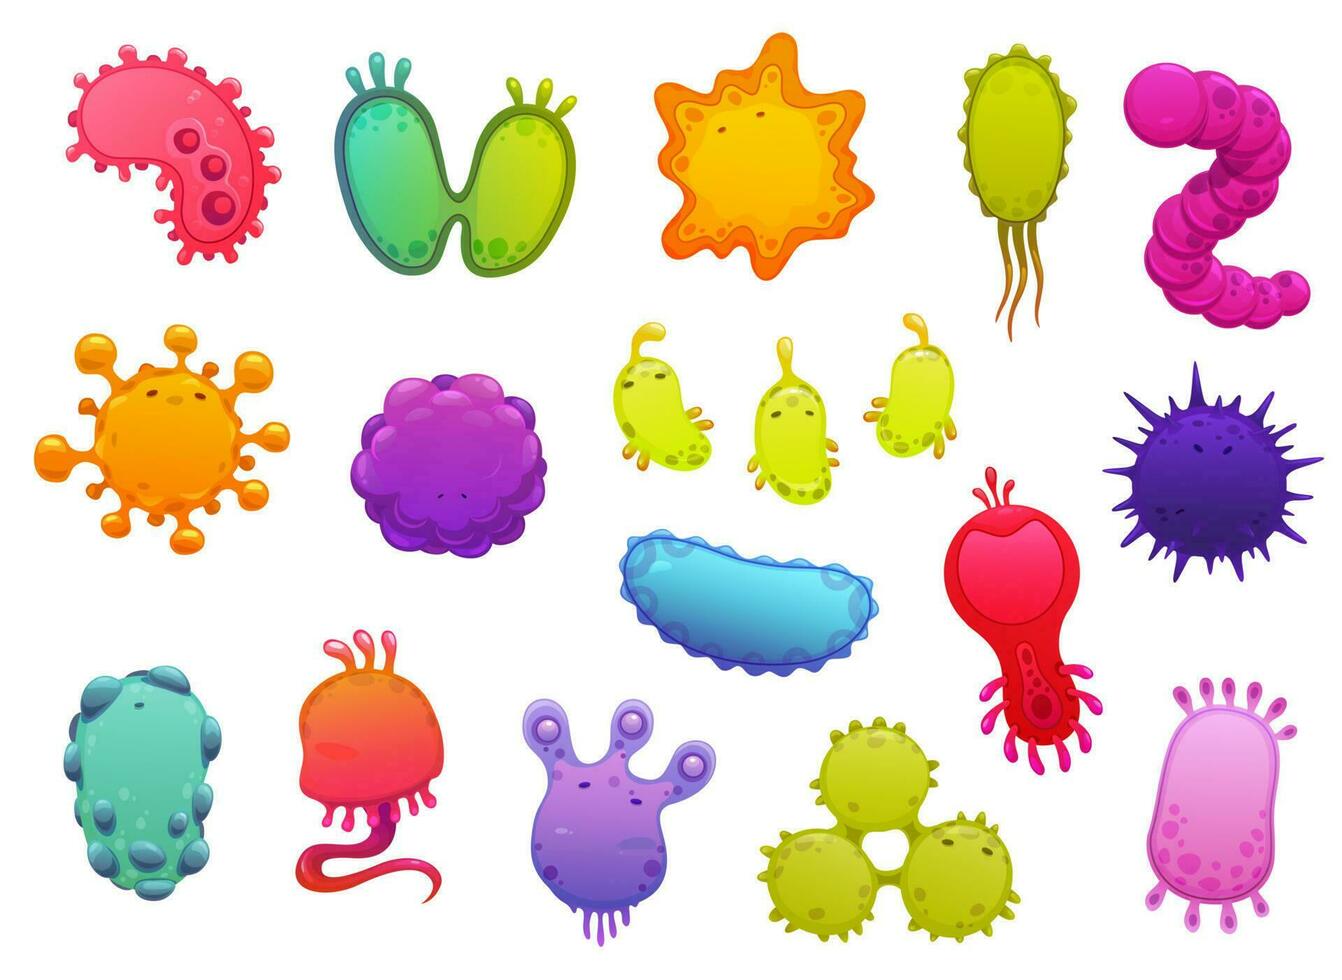 Mikroben, Viren und Coronavirus Erreger Vektor